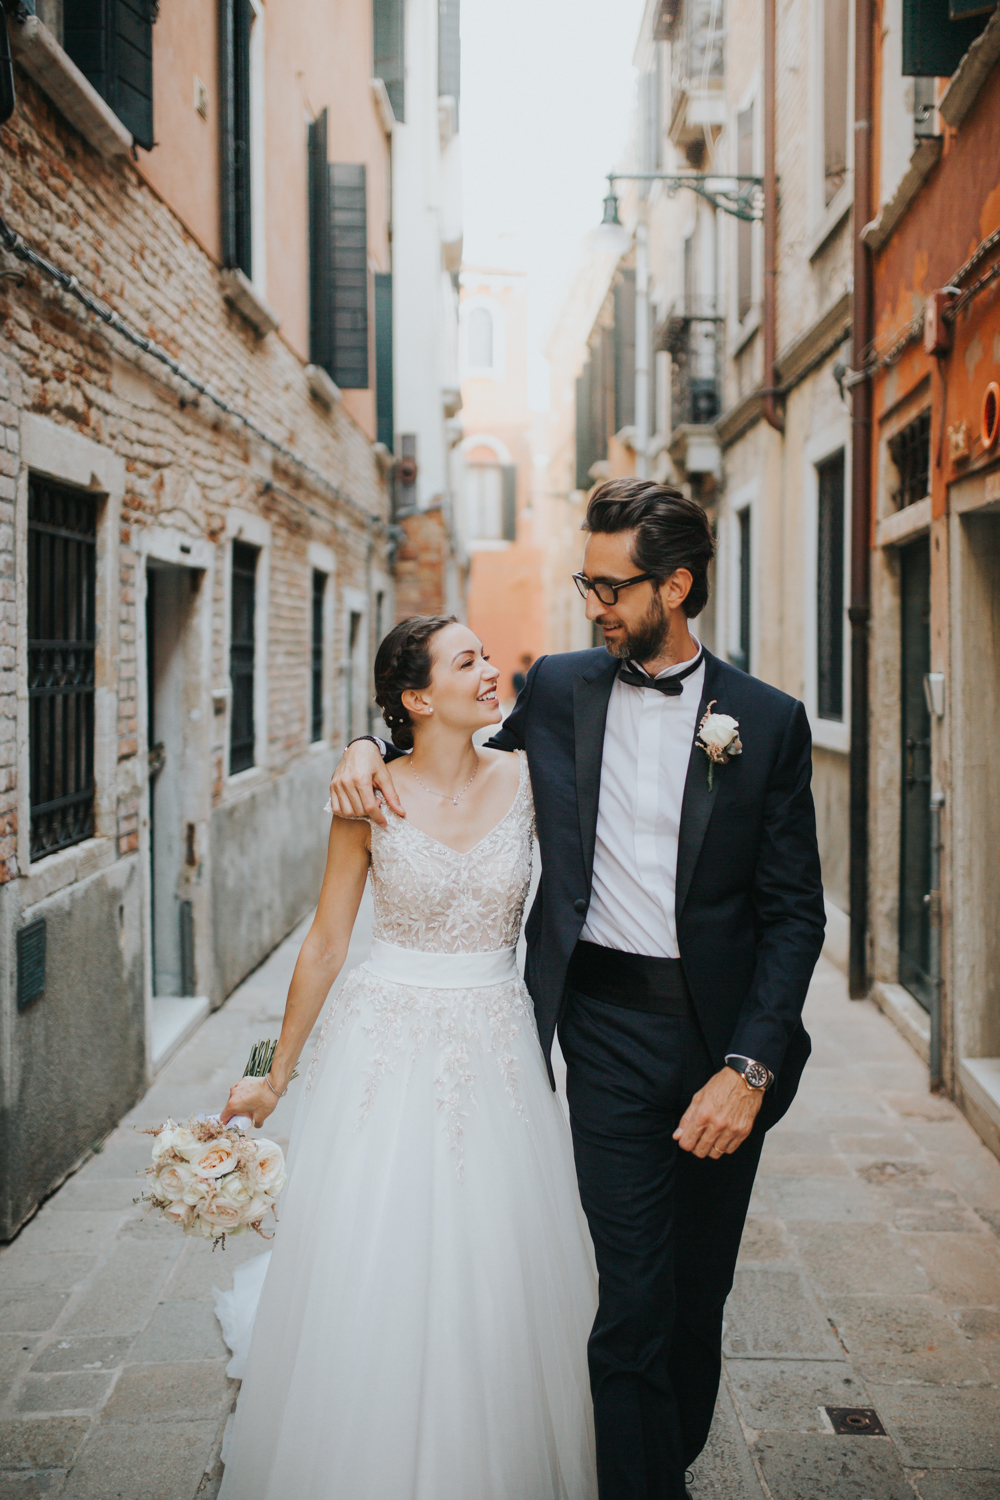 just married on Venetian streets 